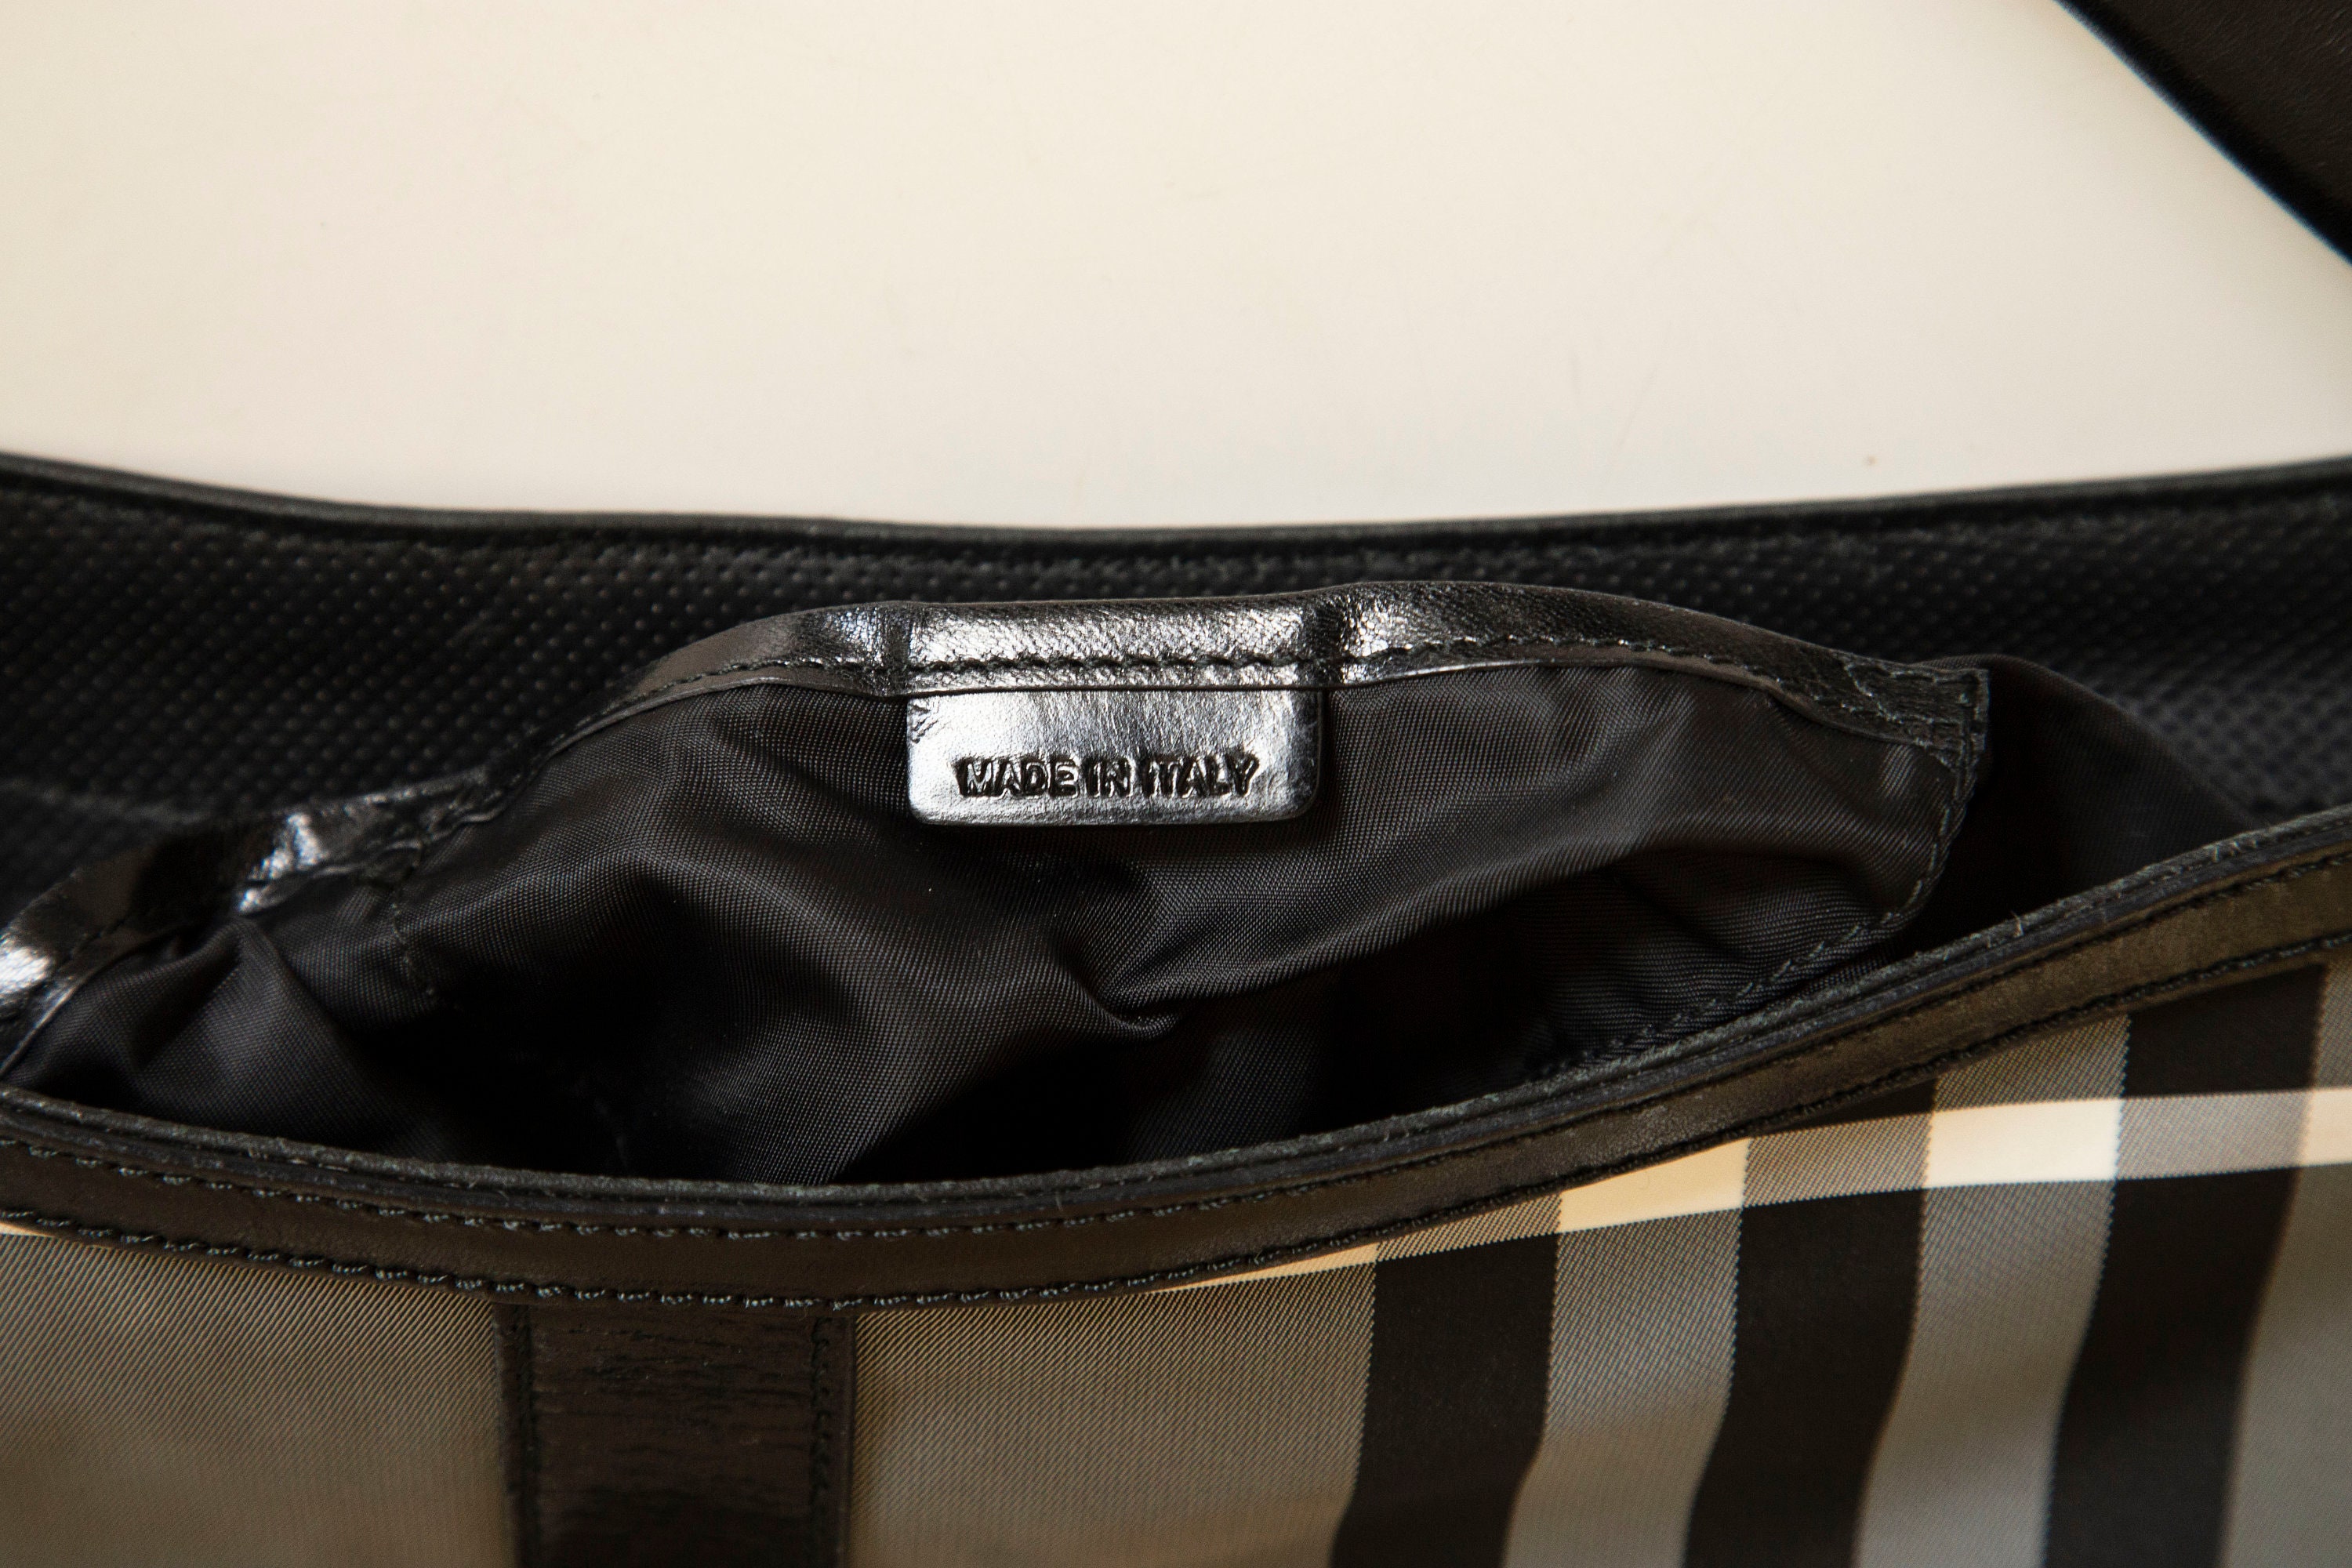 Burberry Shoulder Bag Hobo Bag in Black/Gray/White Nova Check Nylon Very Good Vintage Condition